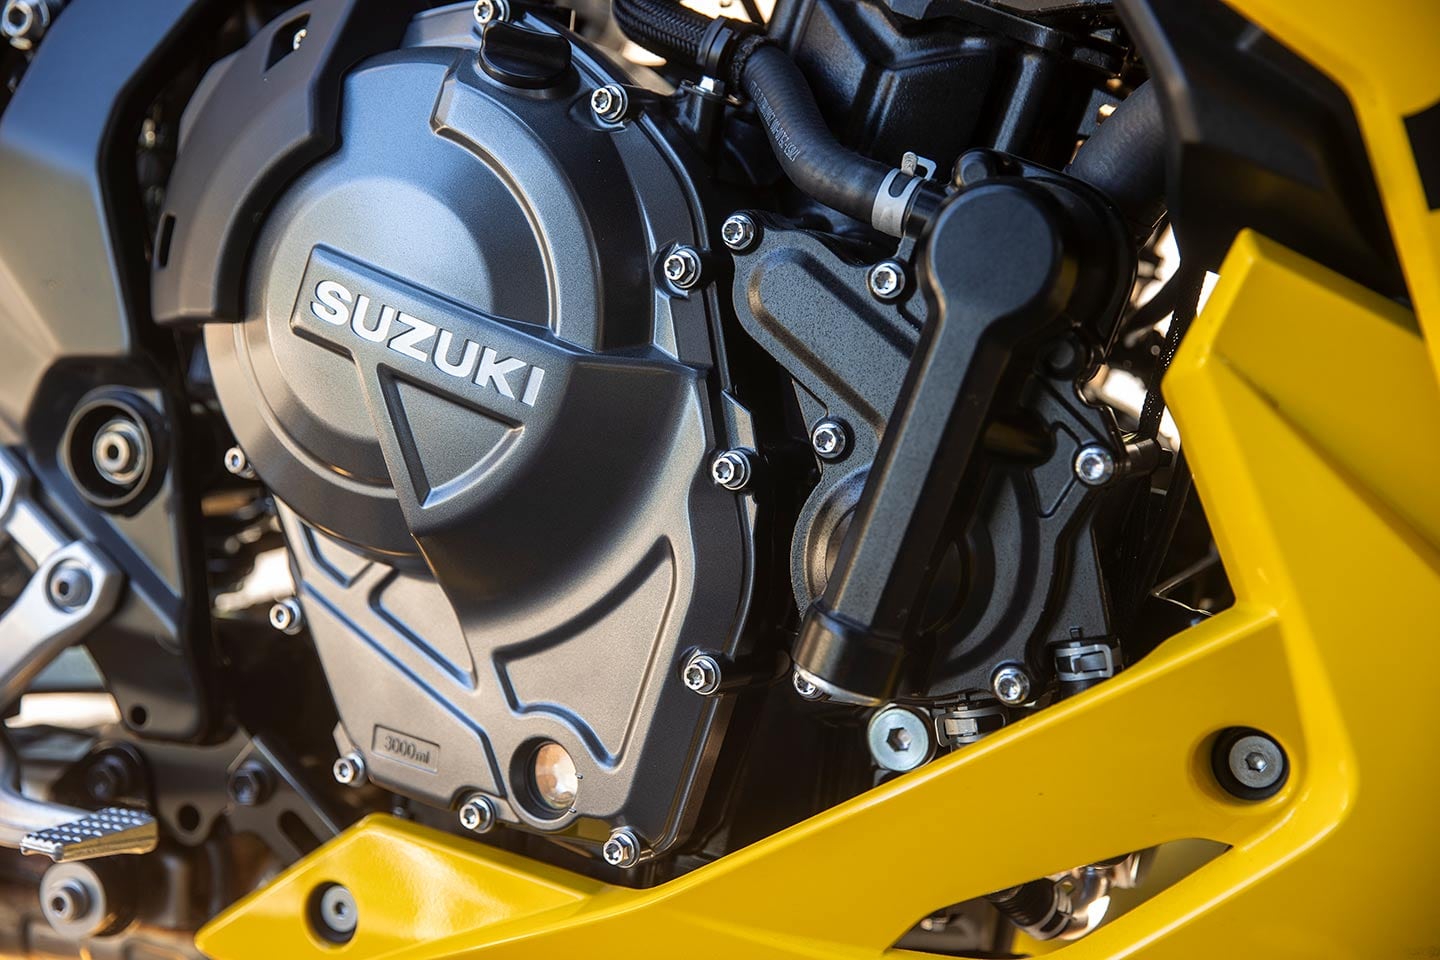 The Suzuki GSX-8R shares its engine with the V-Strom 800DE and GSX-8S.